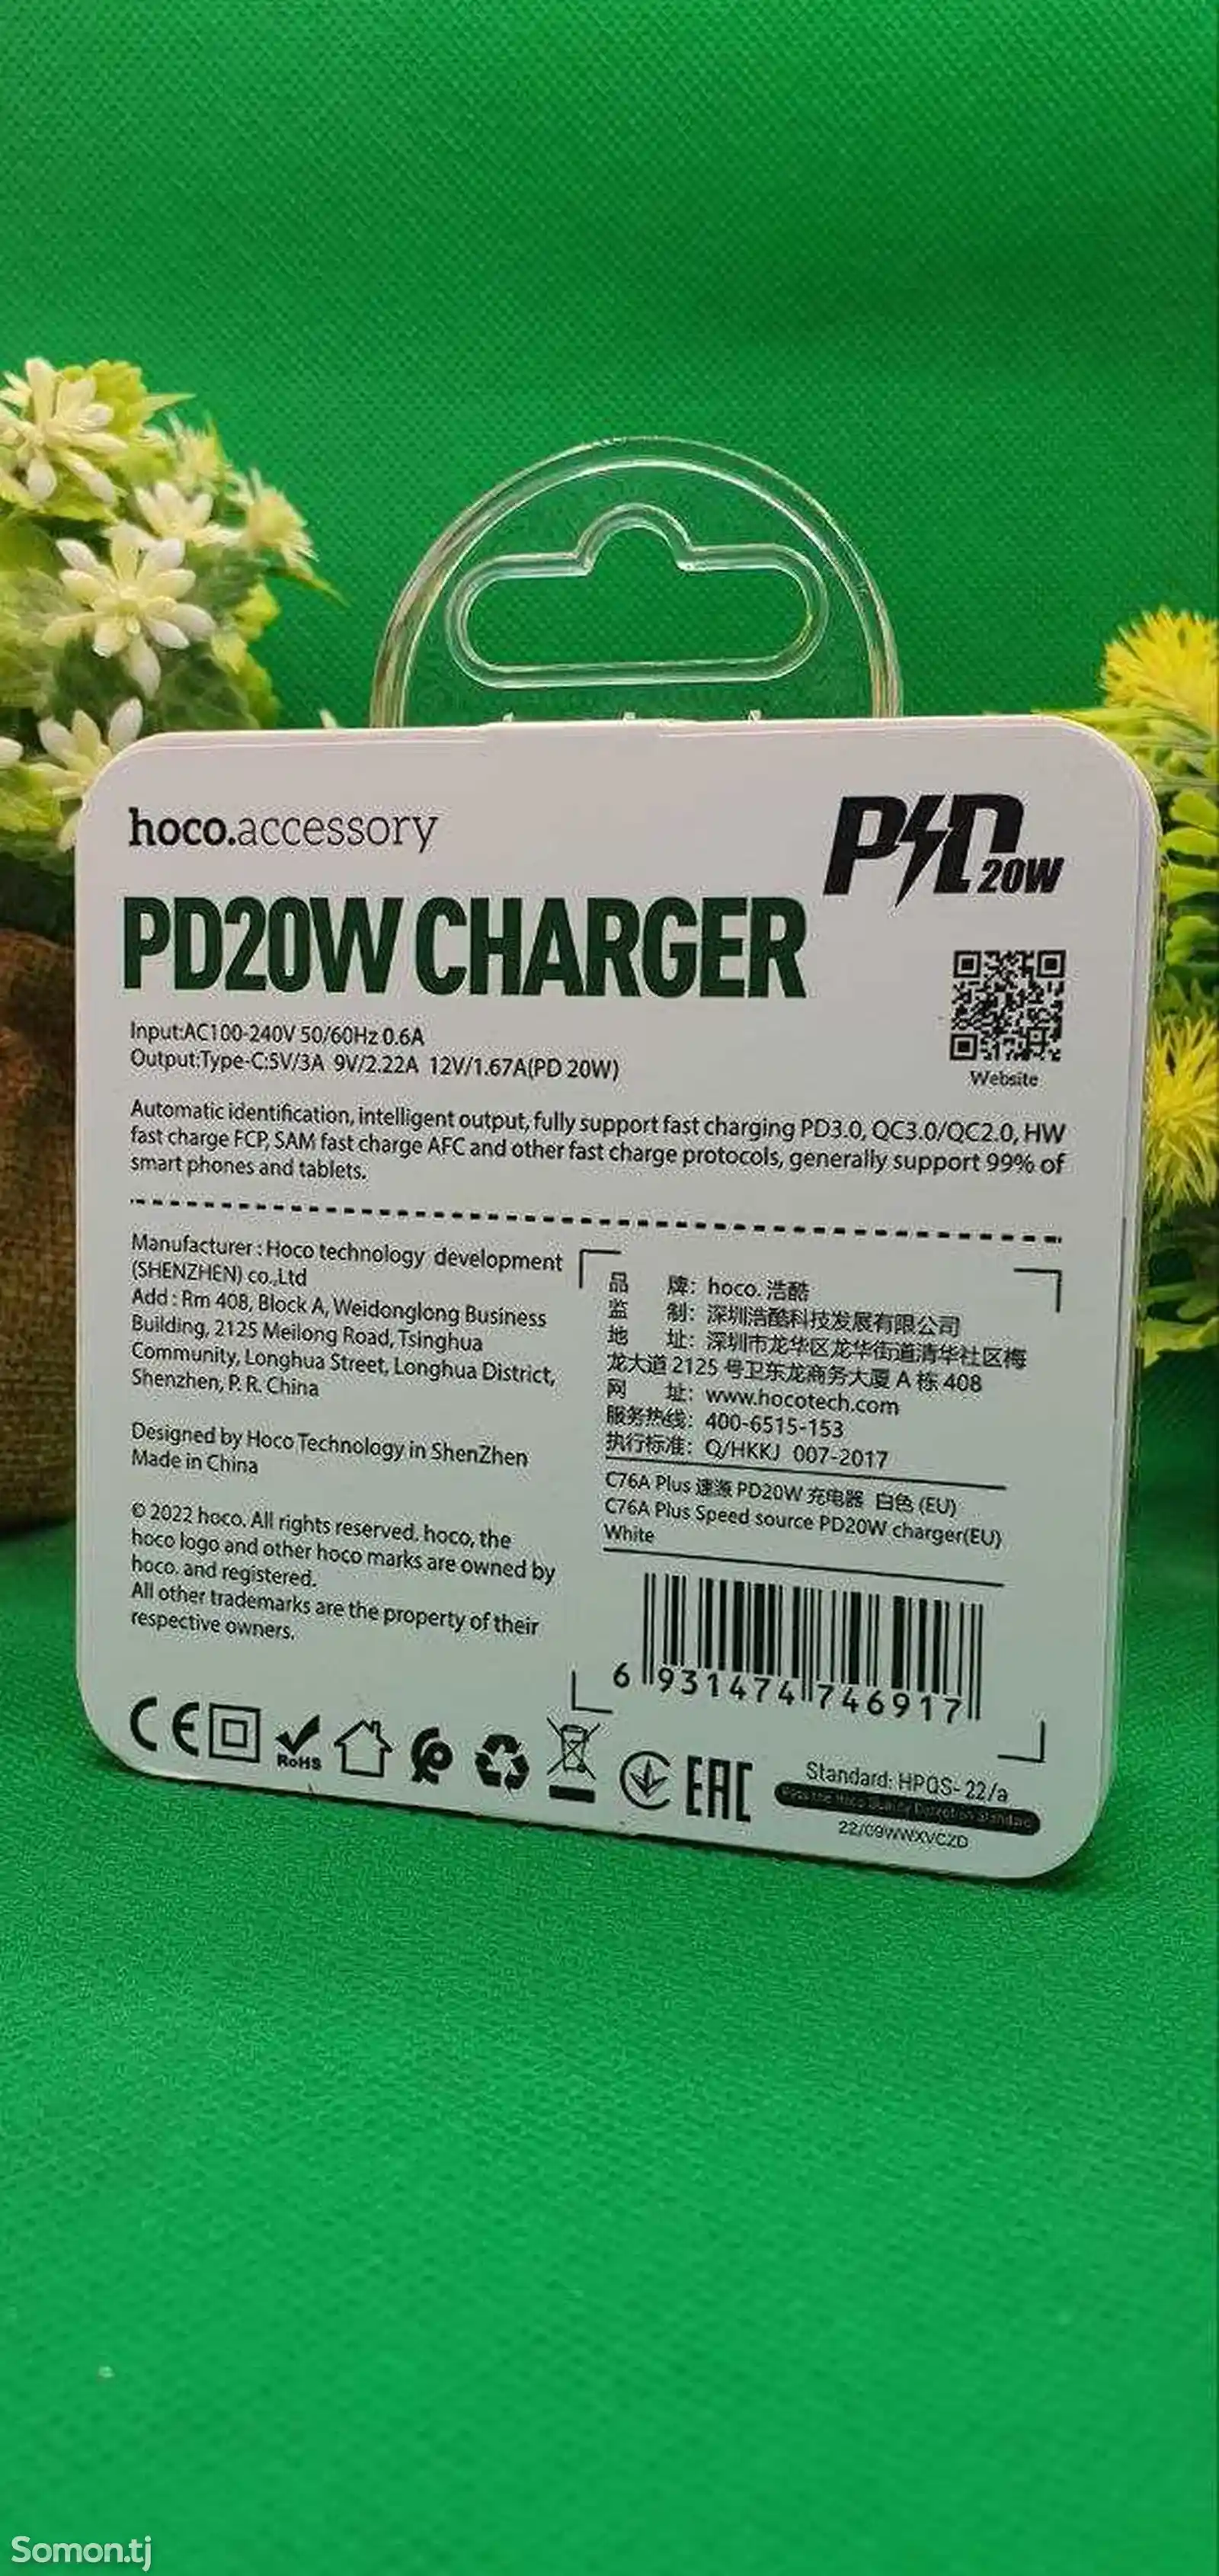 Сетевое зарядное устройство Hoco C76A Plus Speed source PD3.0 charger-2